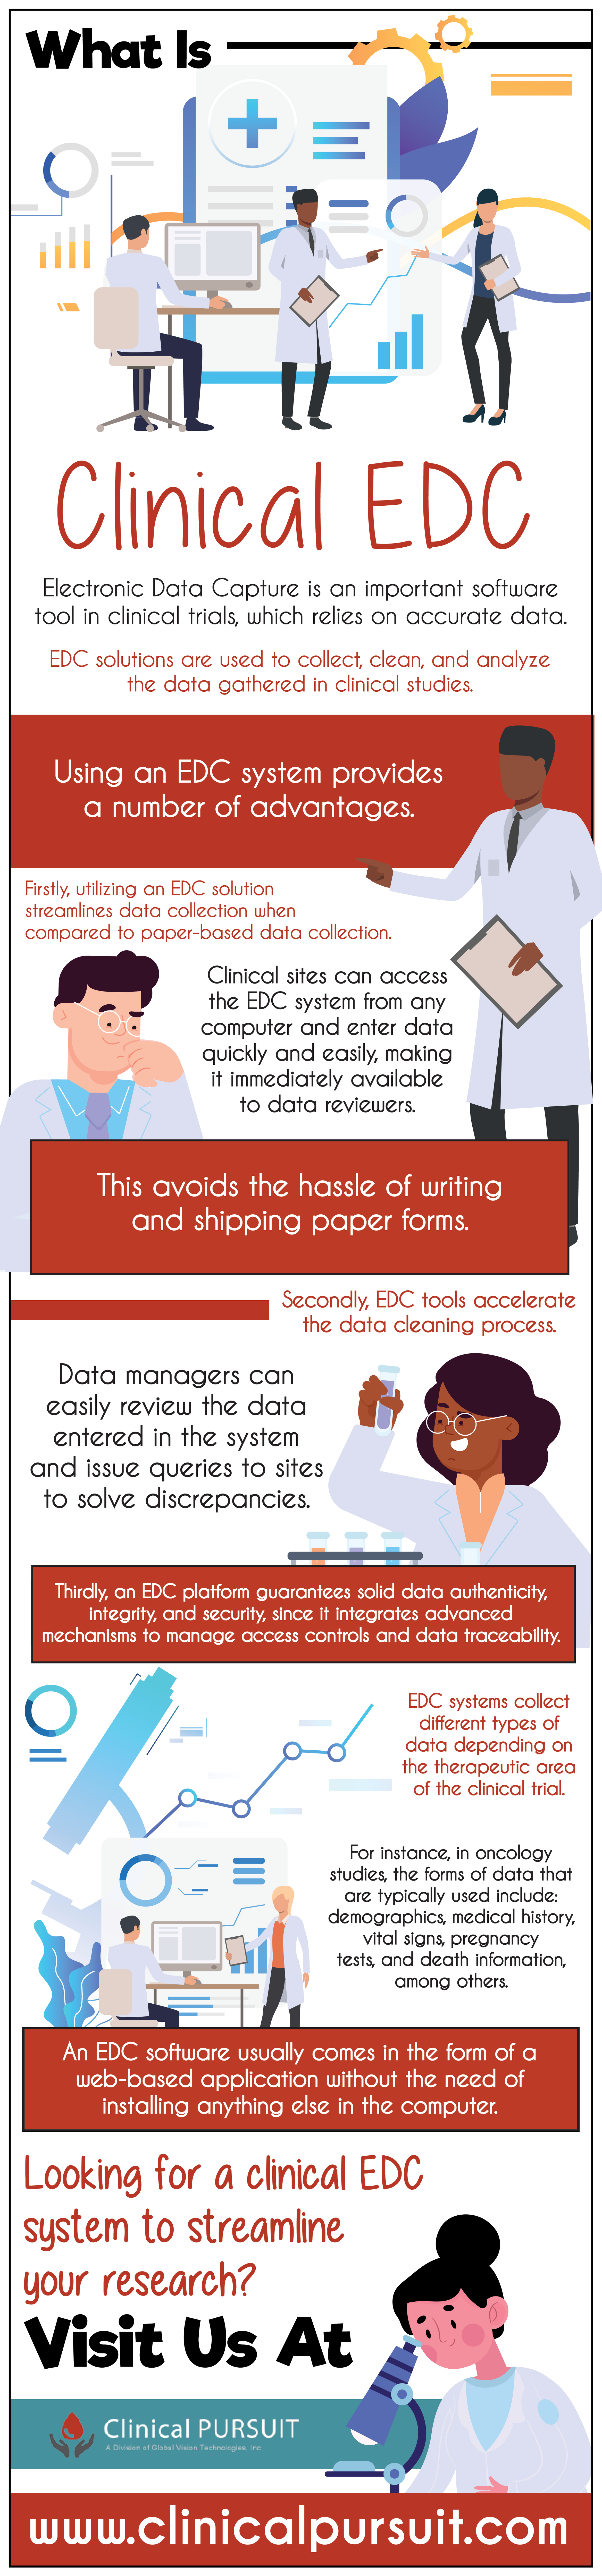 clinical EDC - Infographic explains